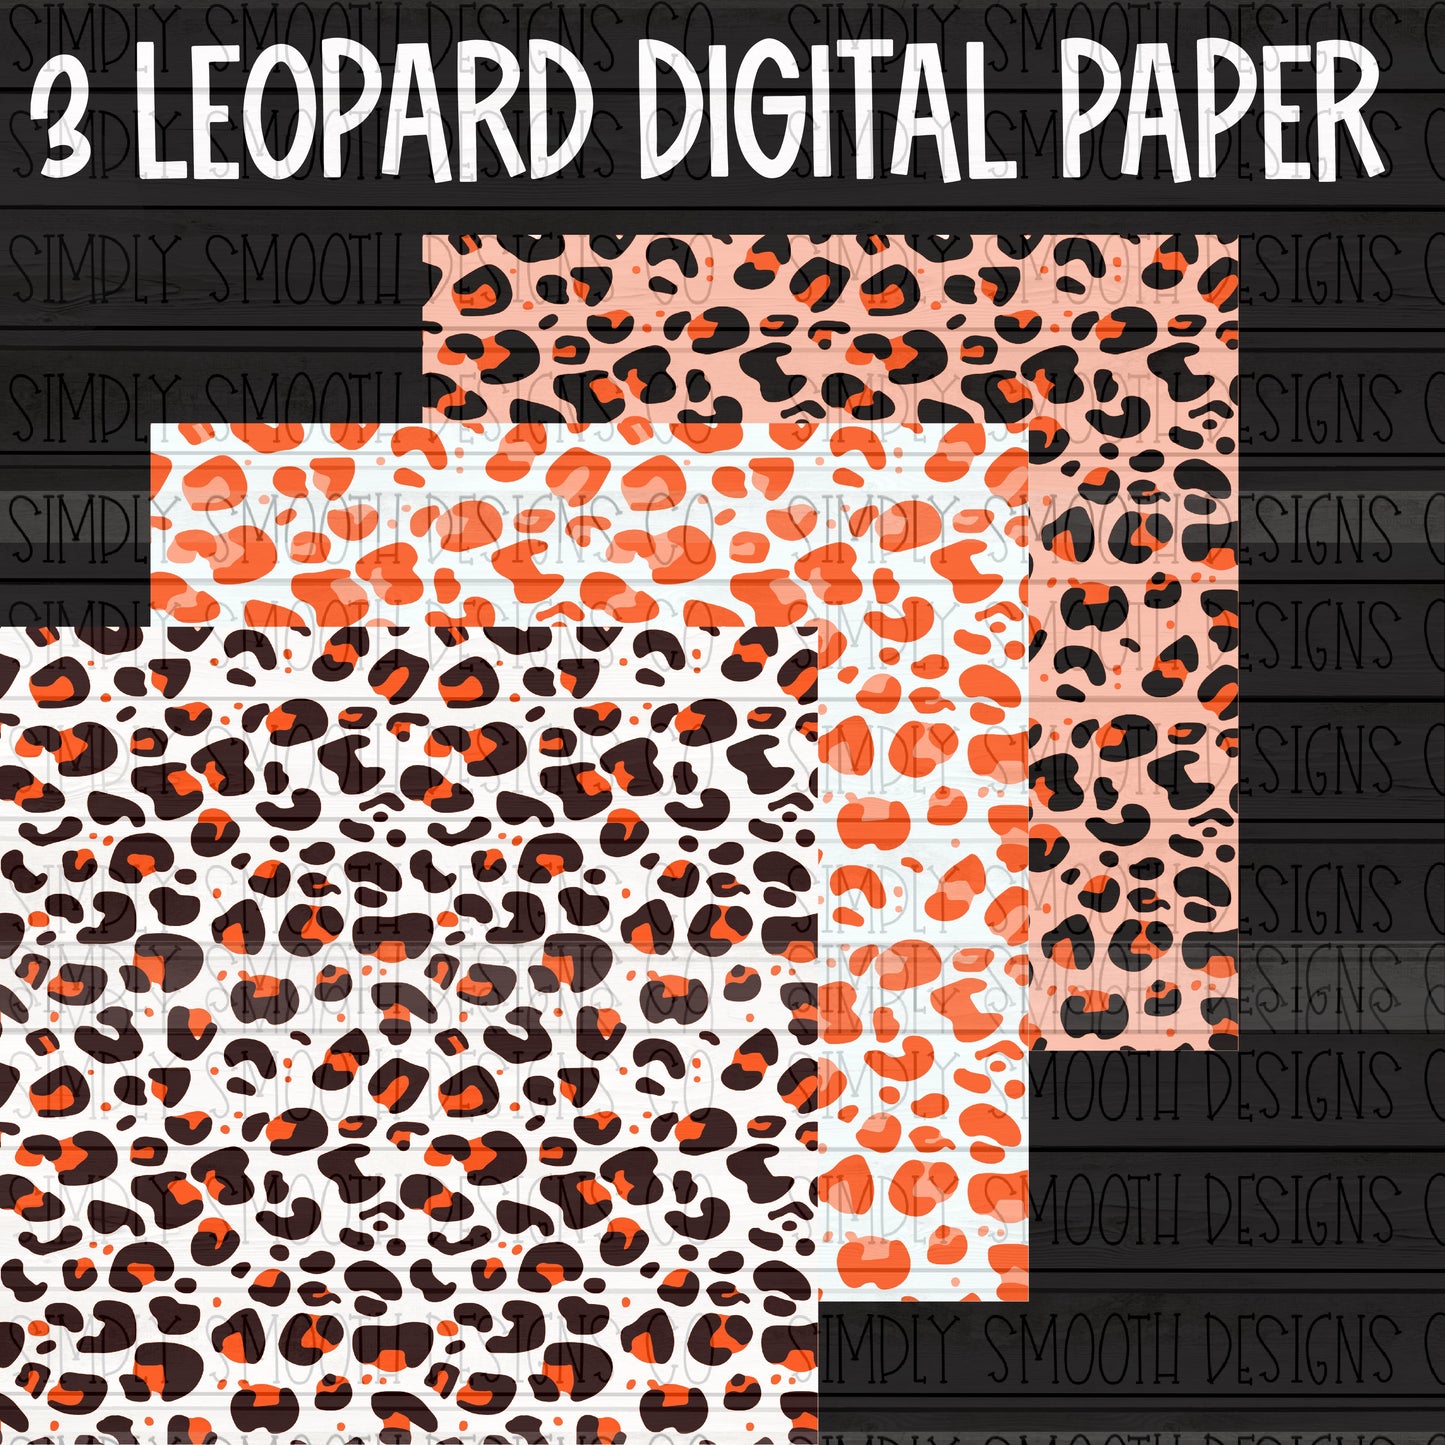 Leopard digital paper